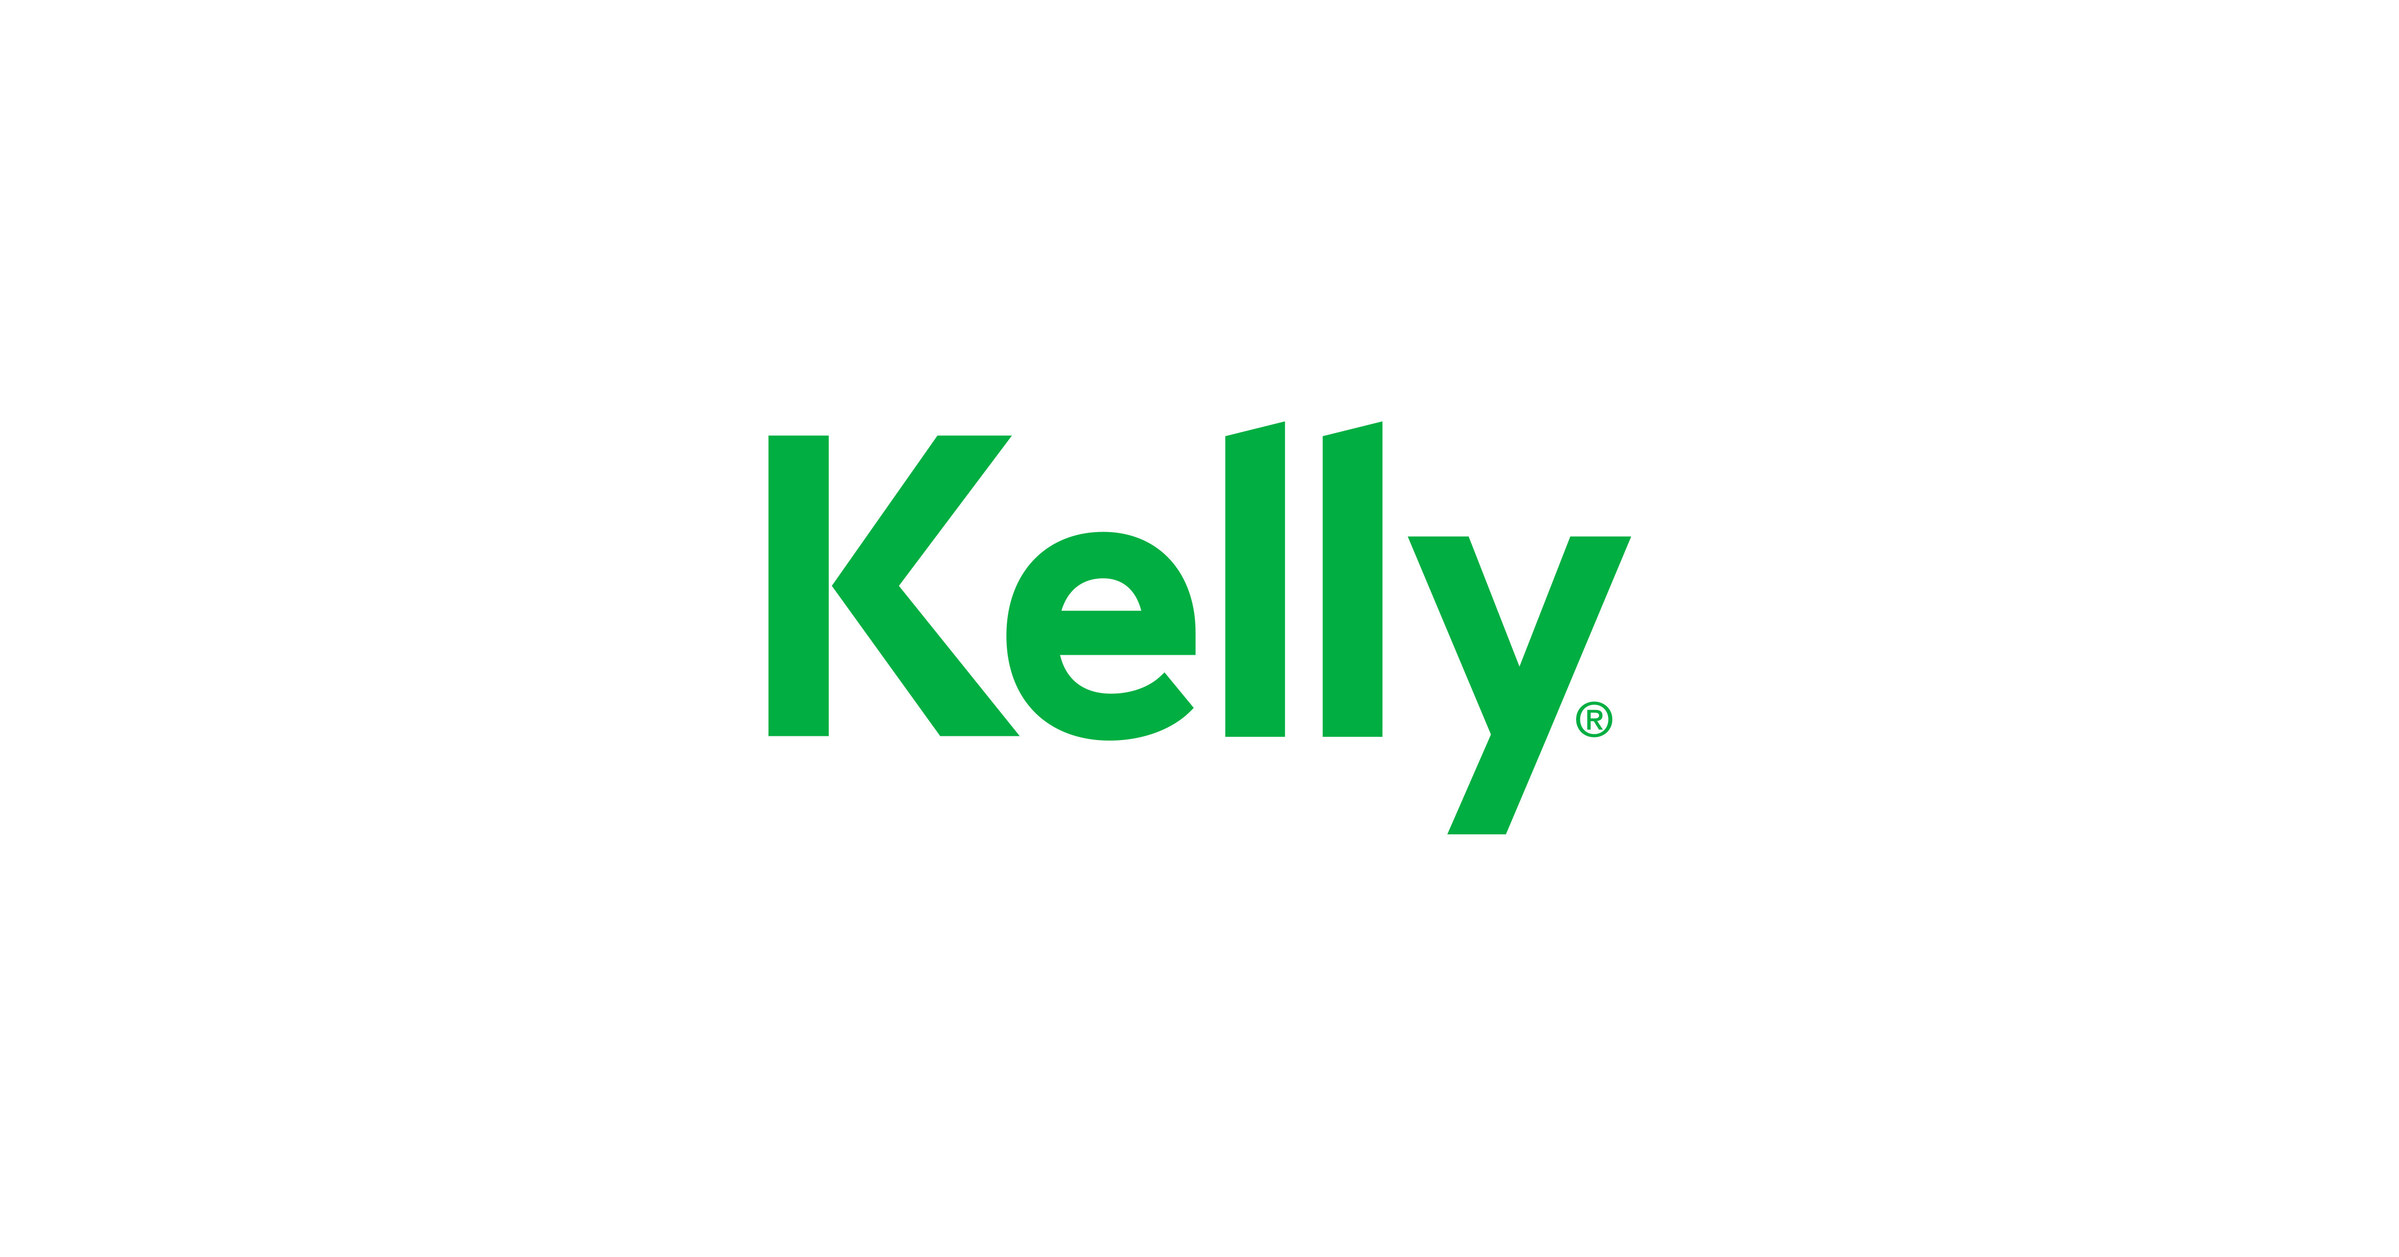 Kelly Recruitment agency